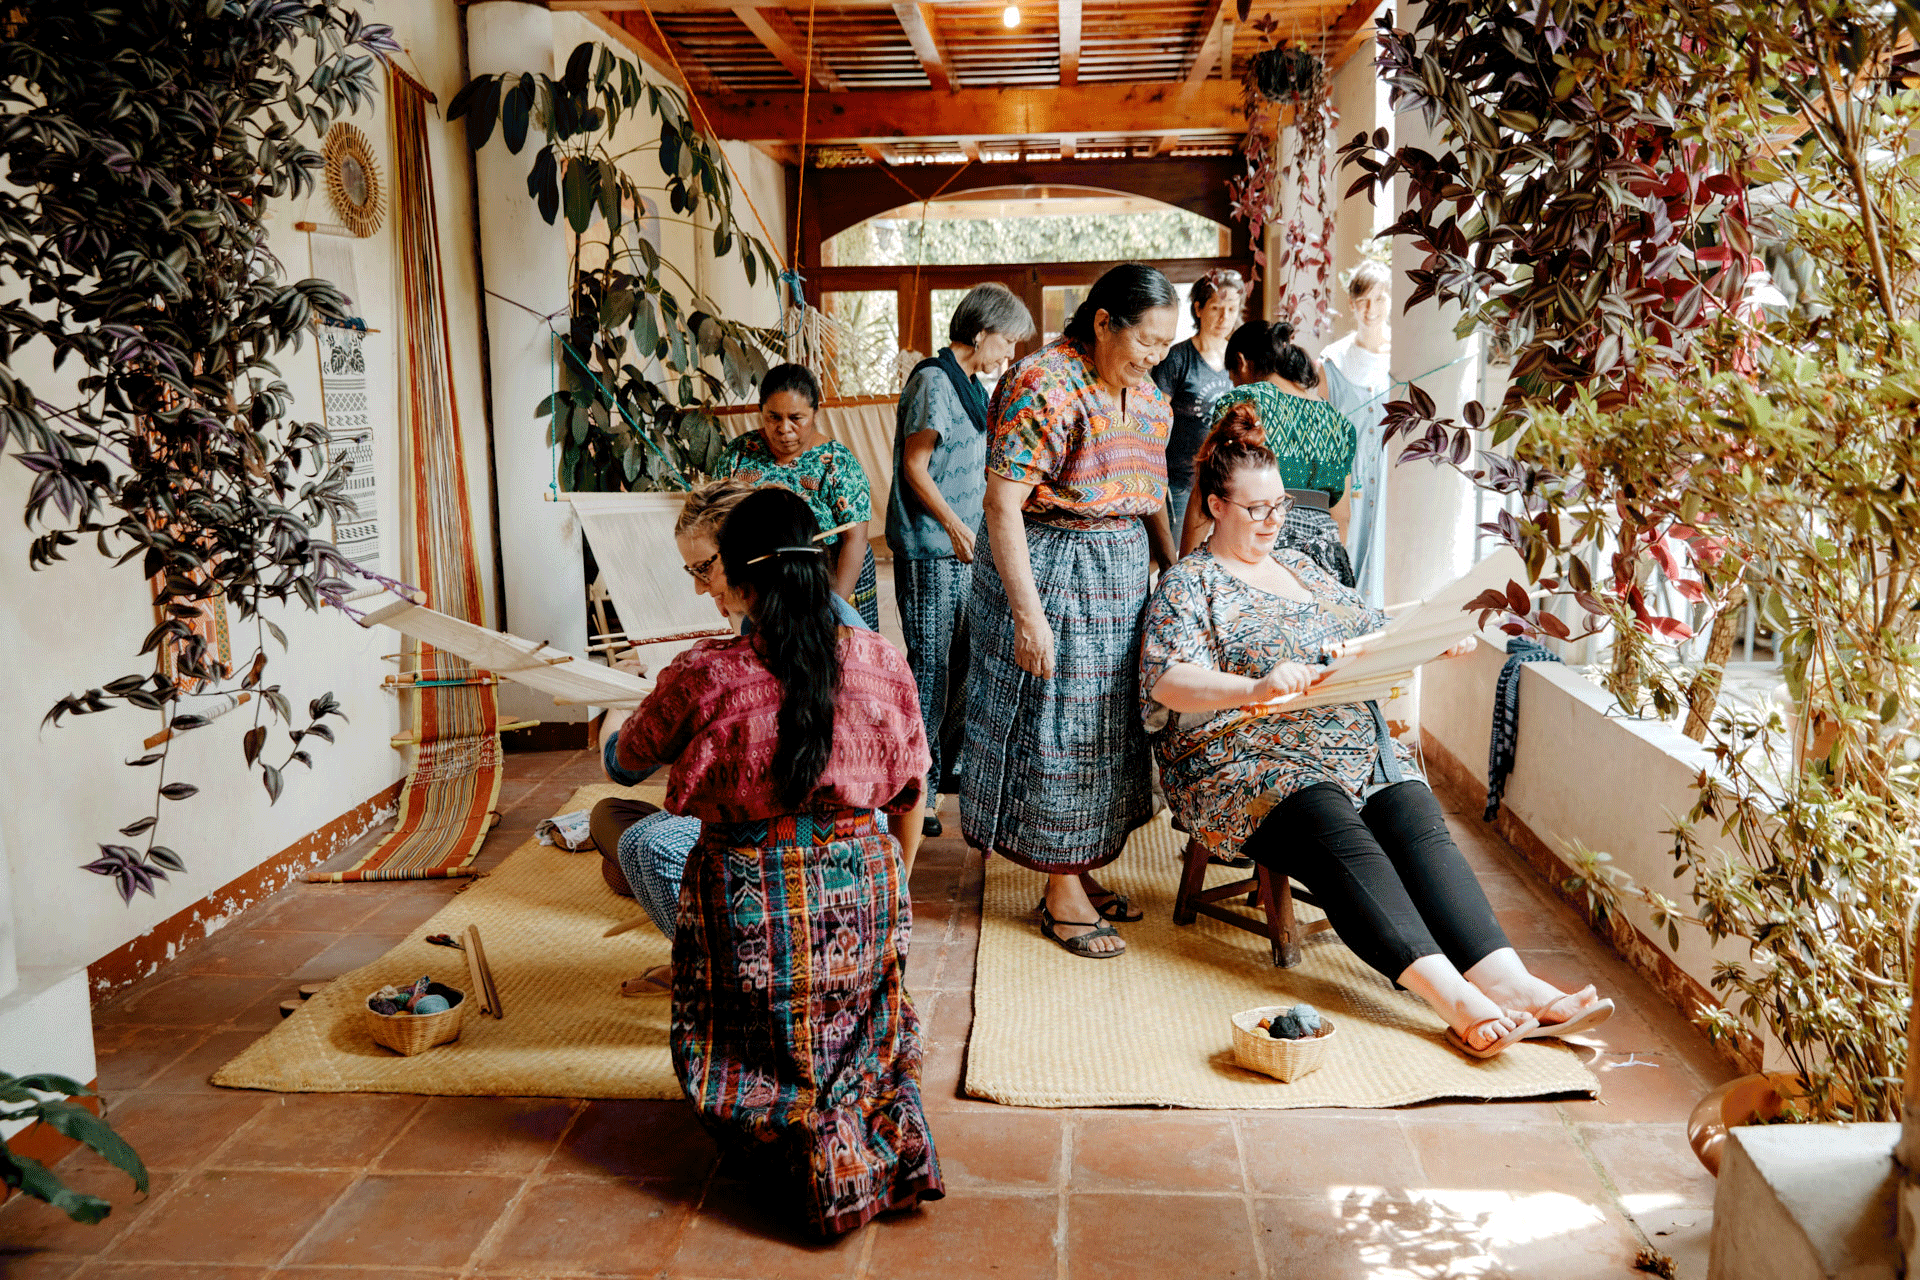 Multigenerational women gathered in a courtyard weaving.